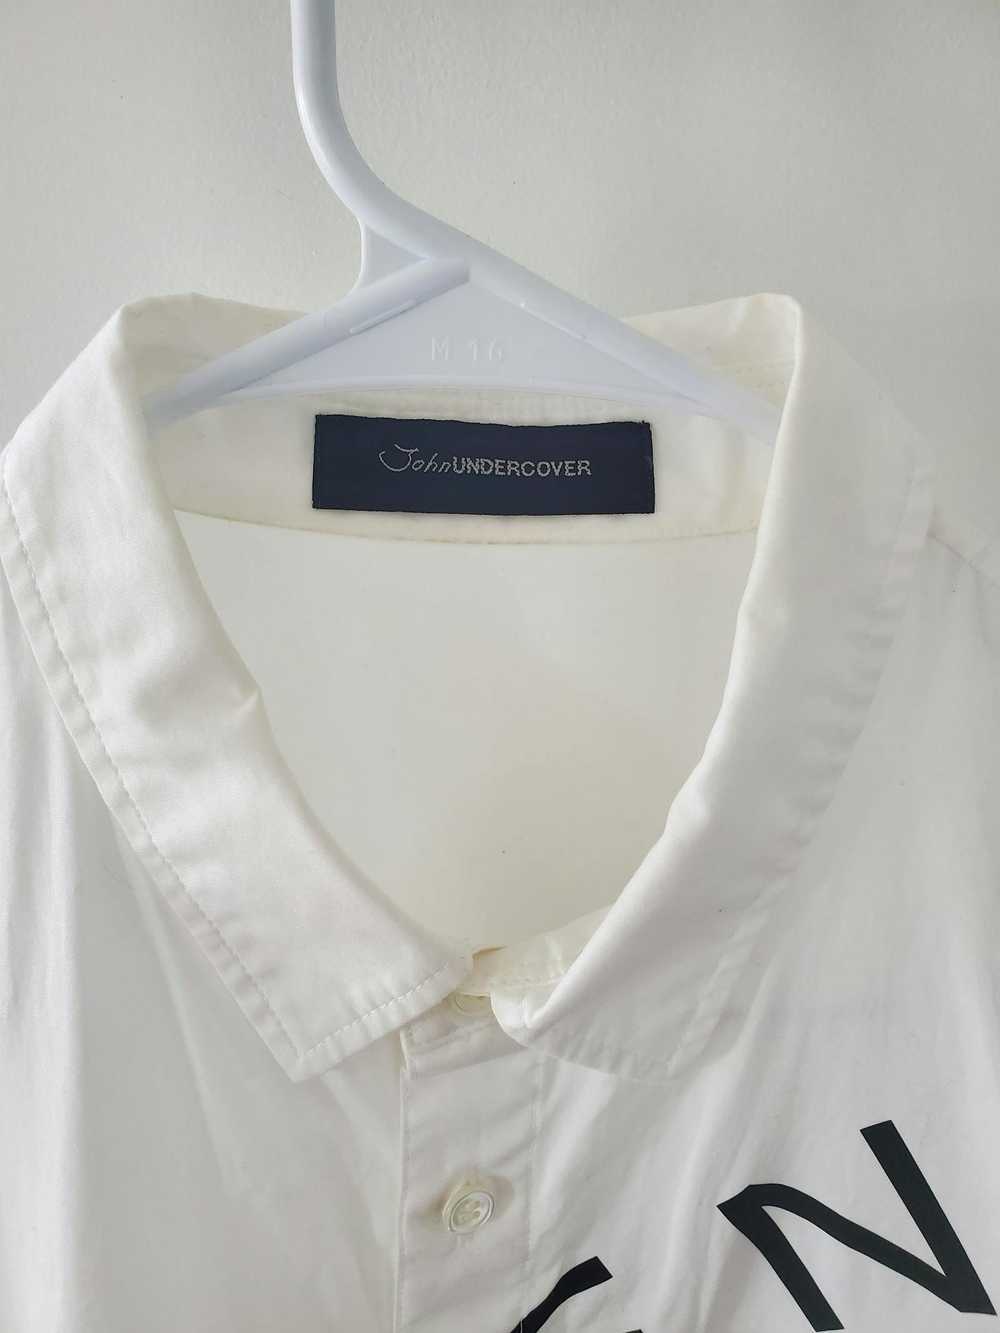 John Undercover "PSYLENCE" White Cotton Shirt - image 5